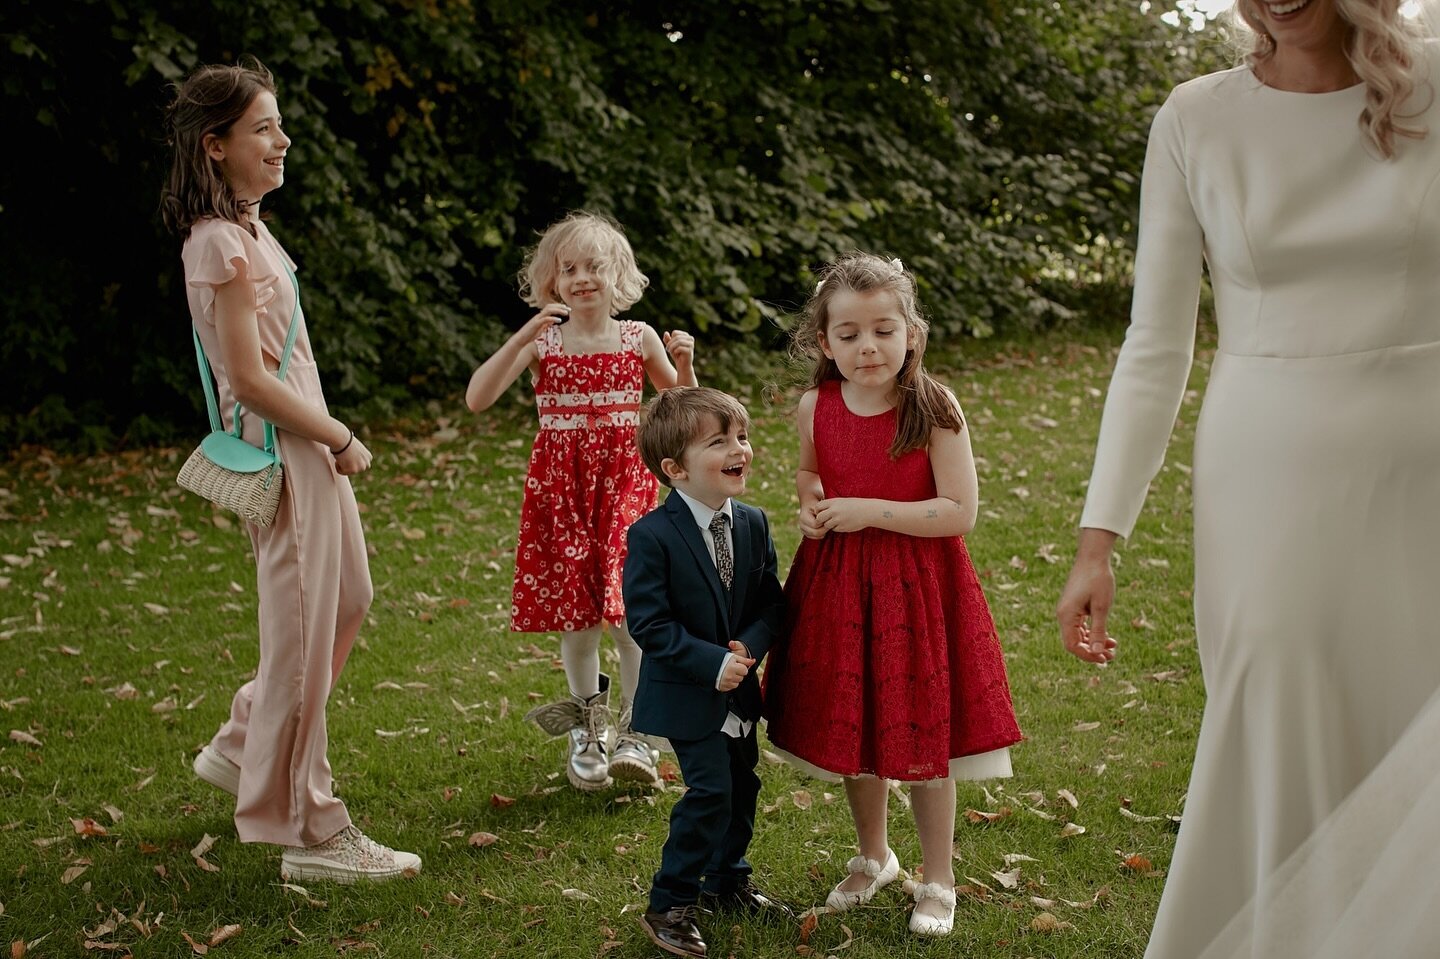 The absolute pure joy and awe in his little face 😭 Kids always bring such magical moments at weddings. 

#irishweddingphotographer #irishwedding #weddingphotographer